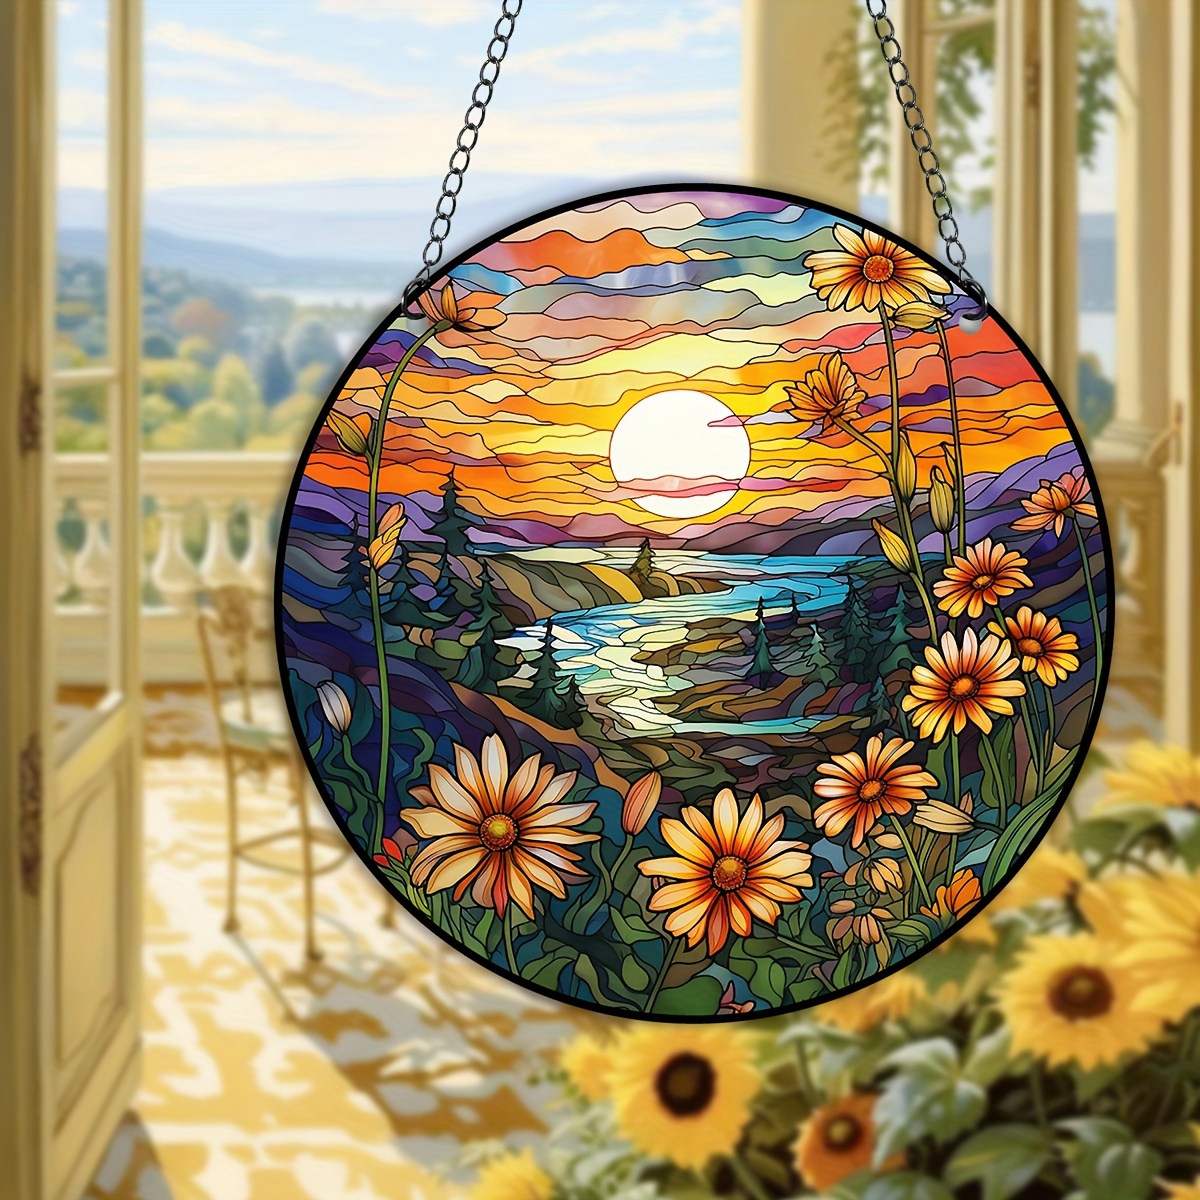 Imitation Glass Mountain Range Mosaic Ornaments Acrylic Craft Fox Sunflower